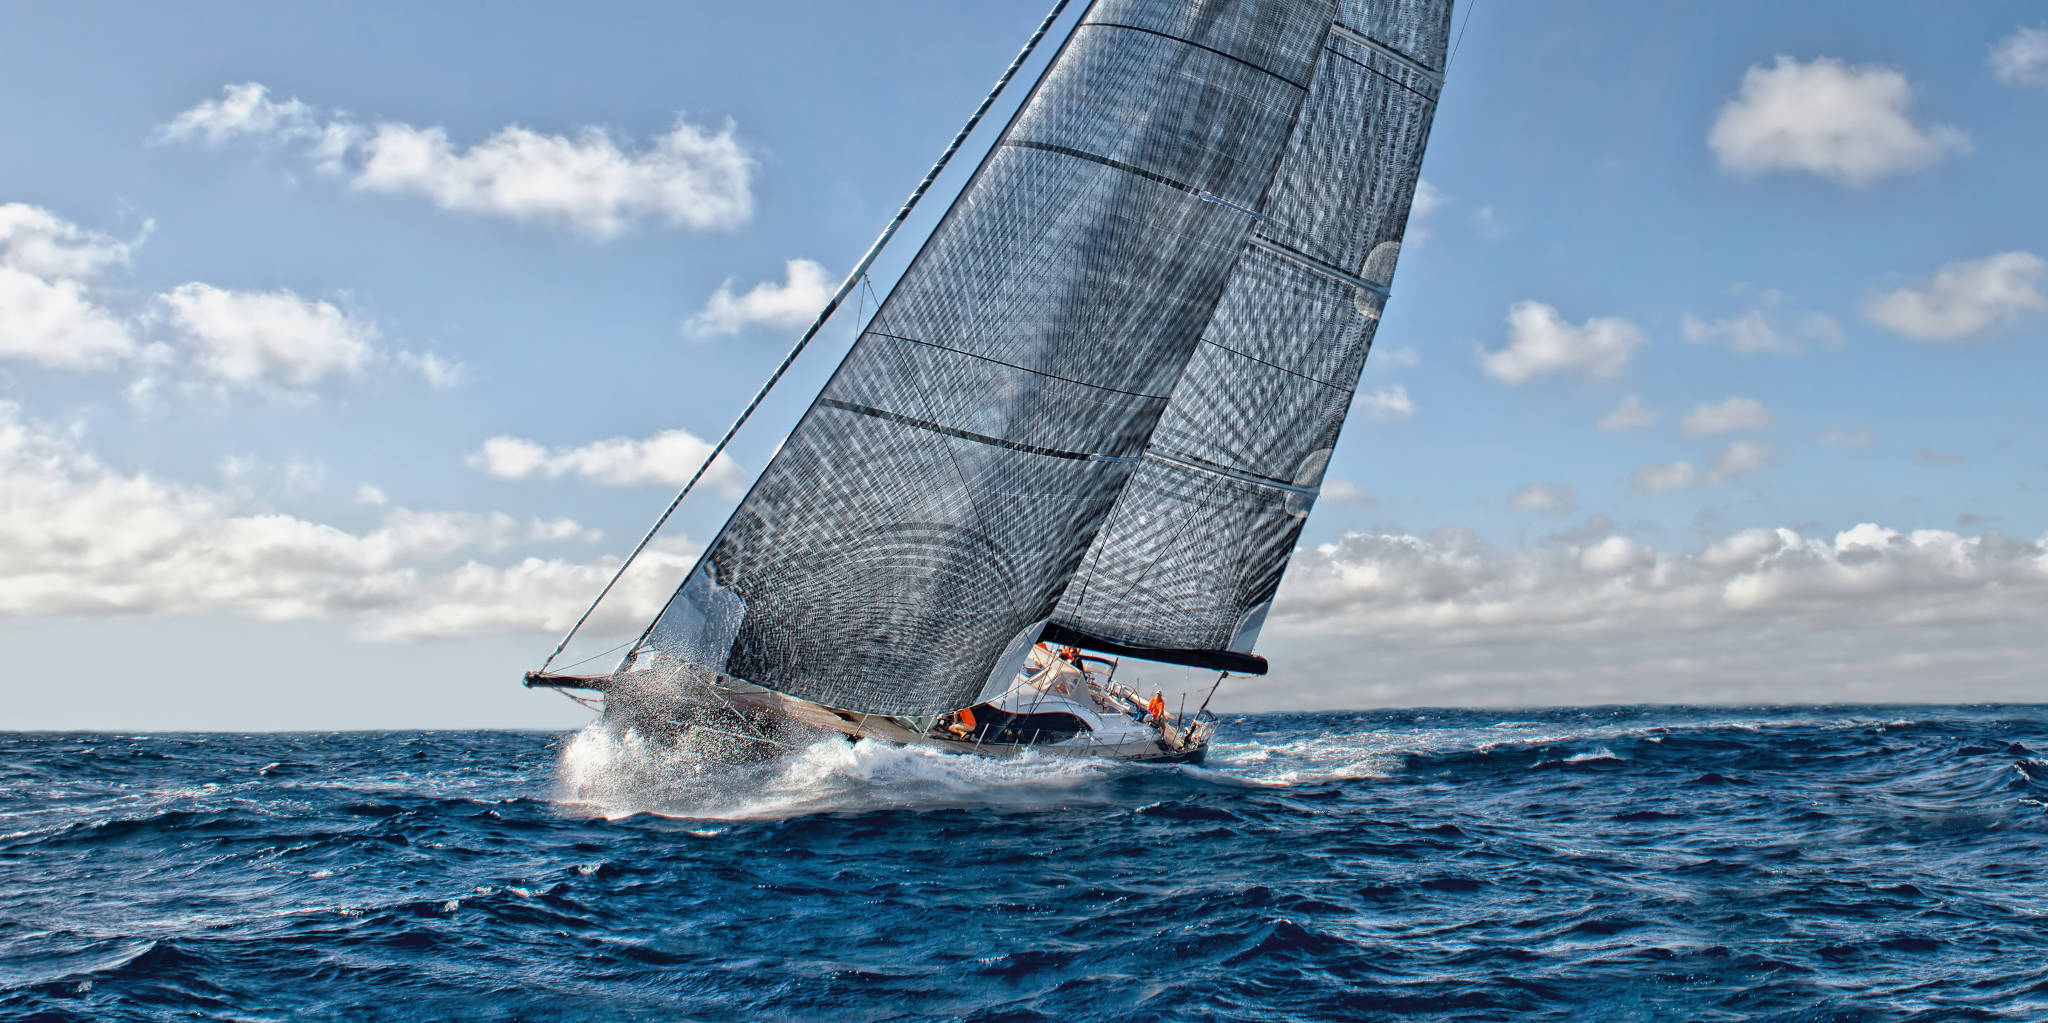 Sailing yacht reaching